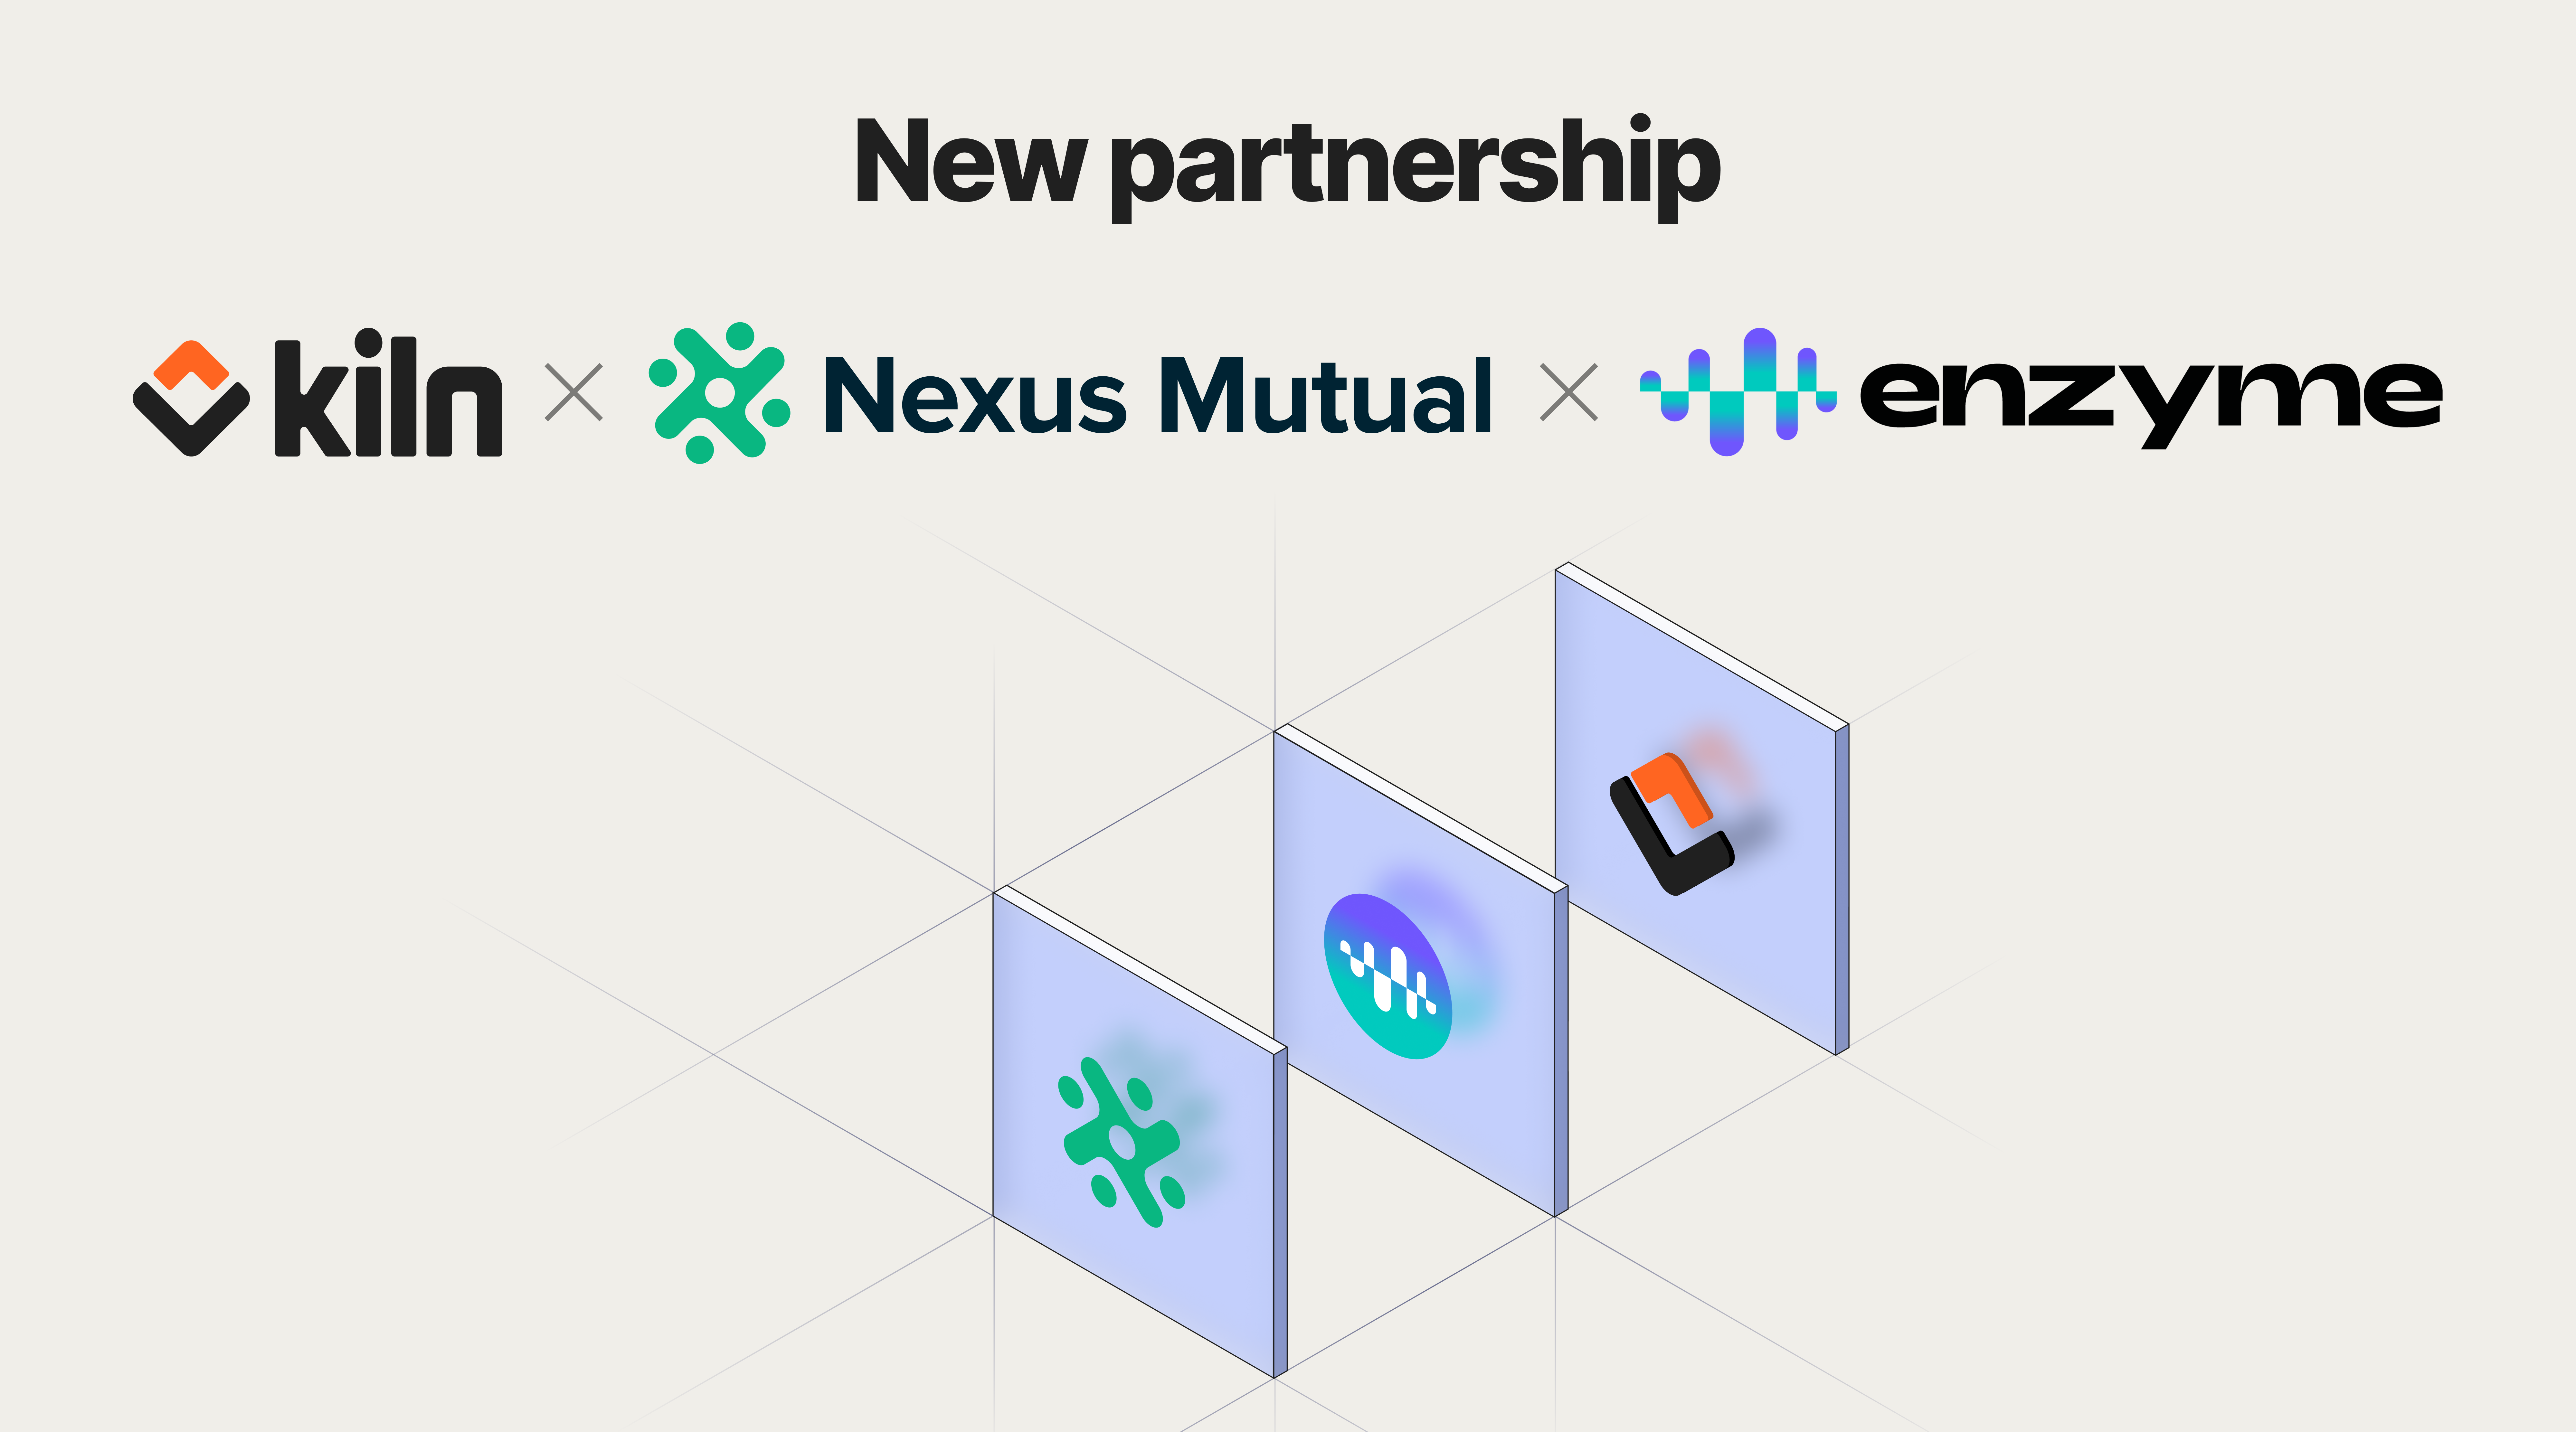 Nexus Mutual stakes its capital pool with Kiln through Enzyme